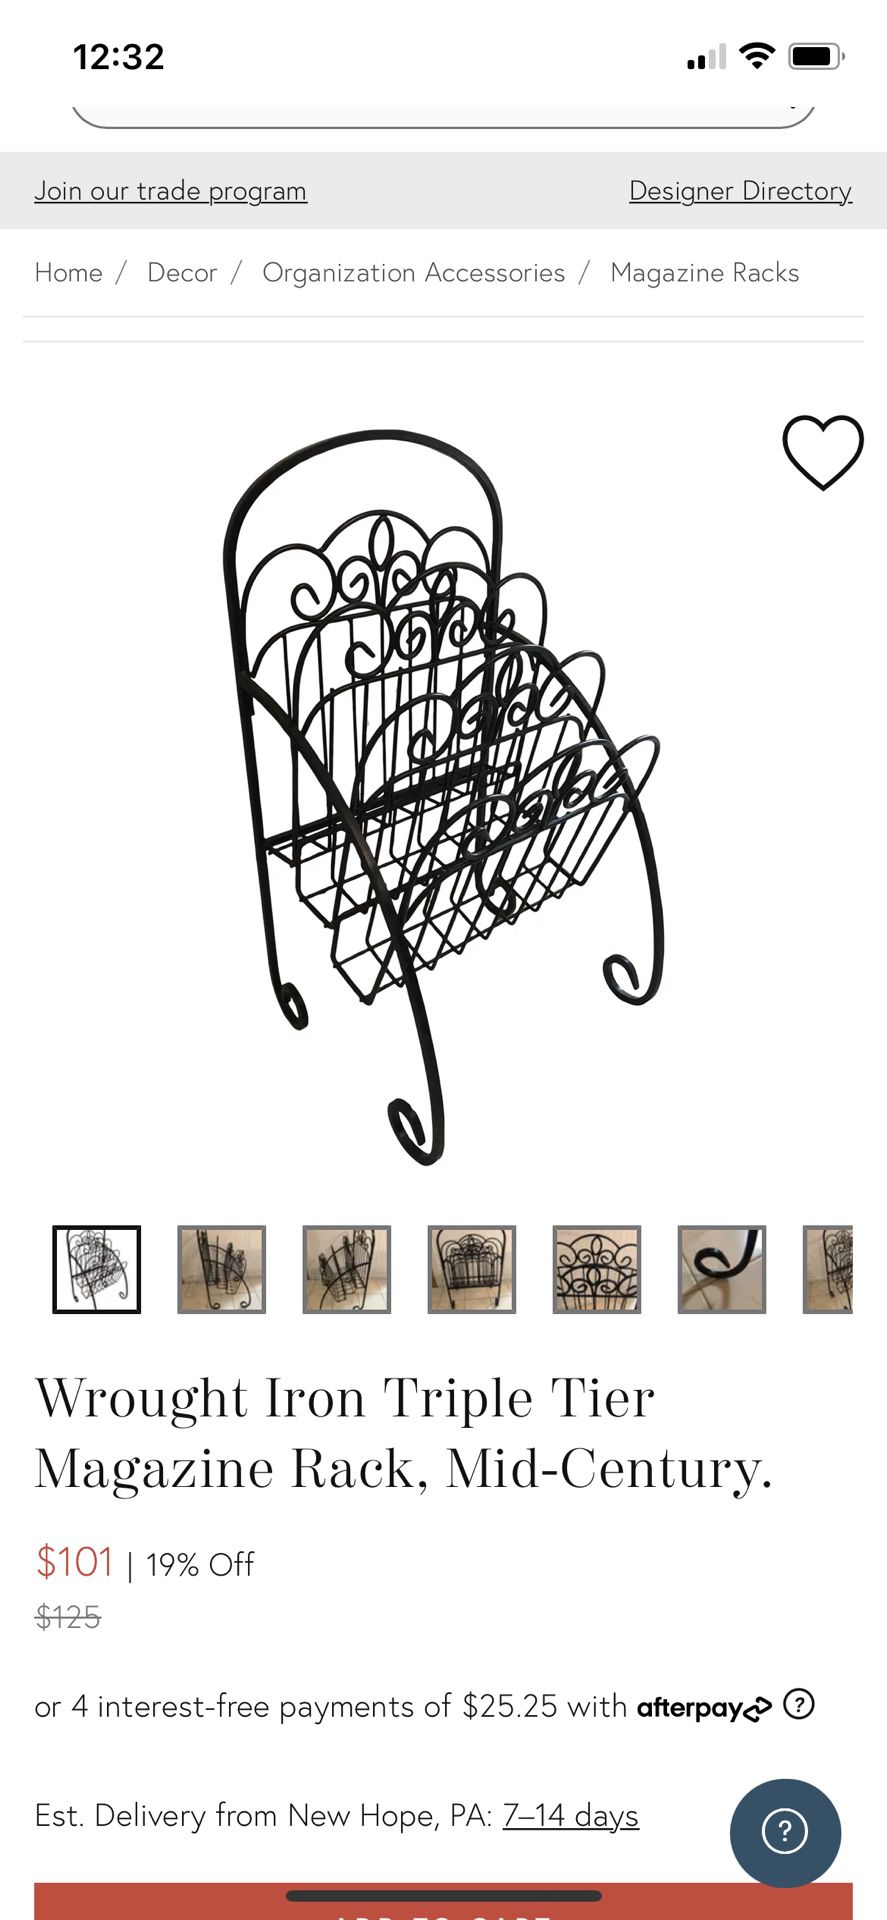 Wrought Iron Triple Tier Magazine Rack, Mid-Century.